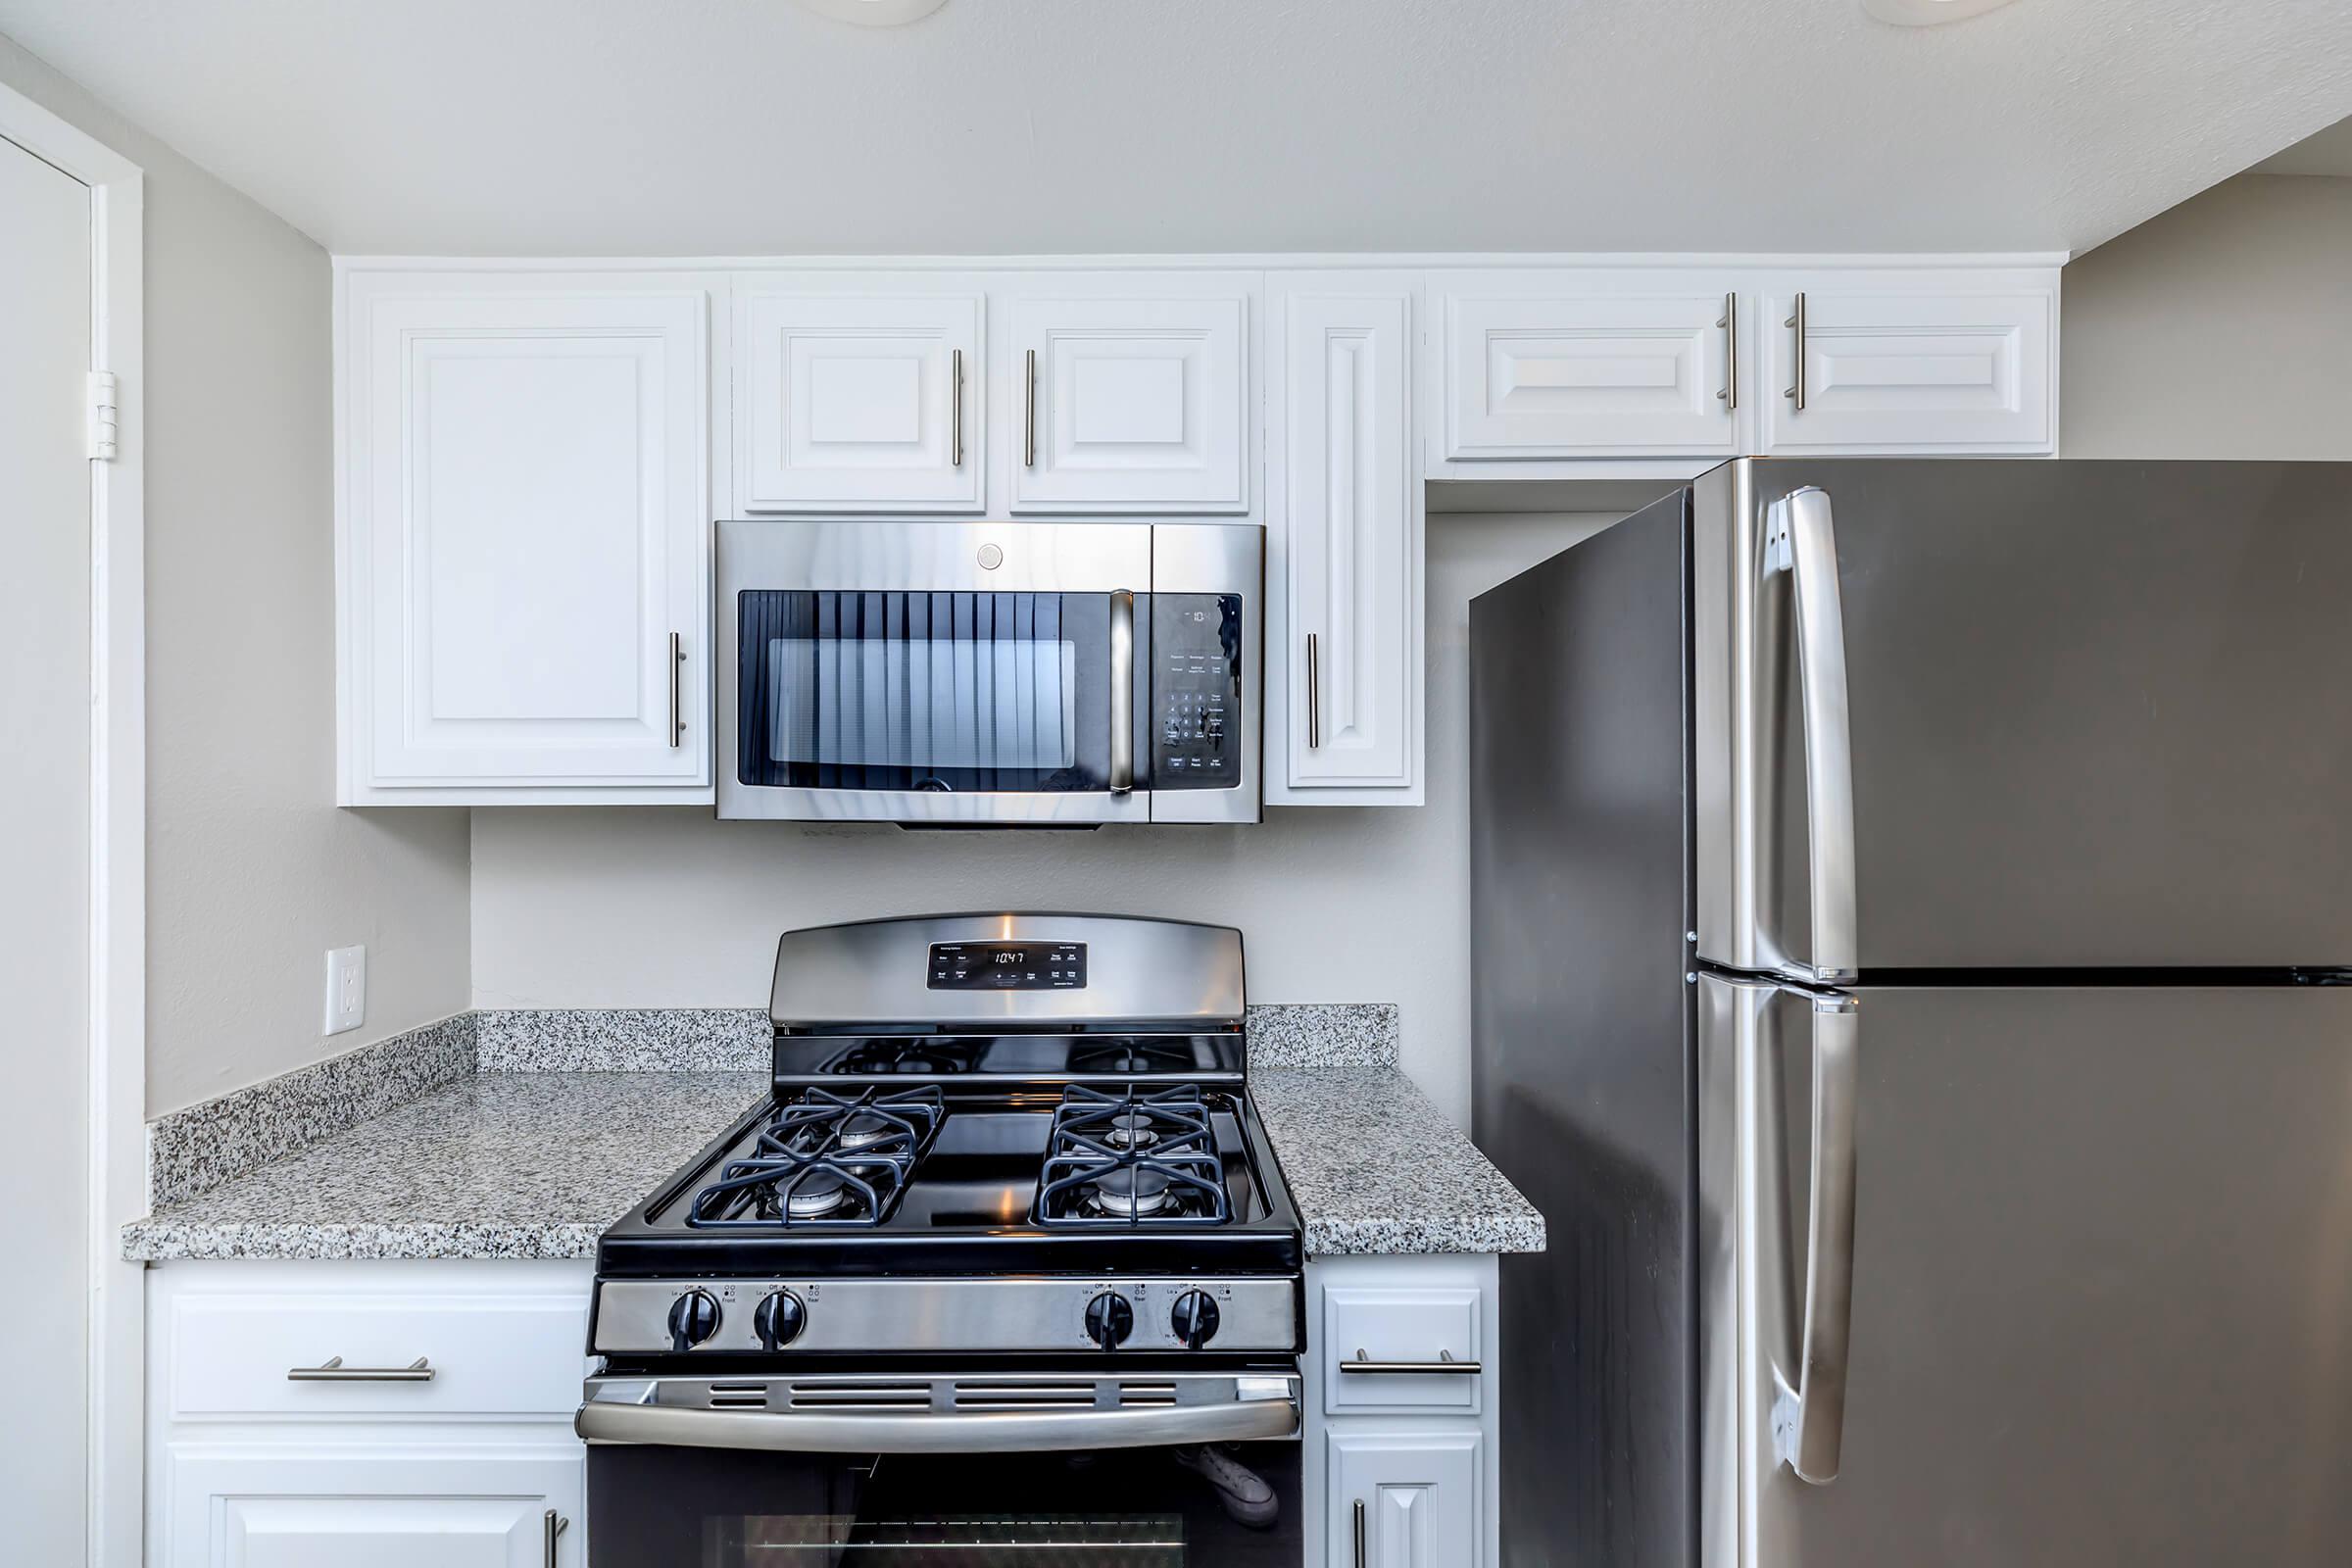 Kitchen stove and fridge with granite countertops